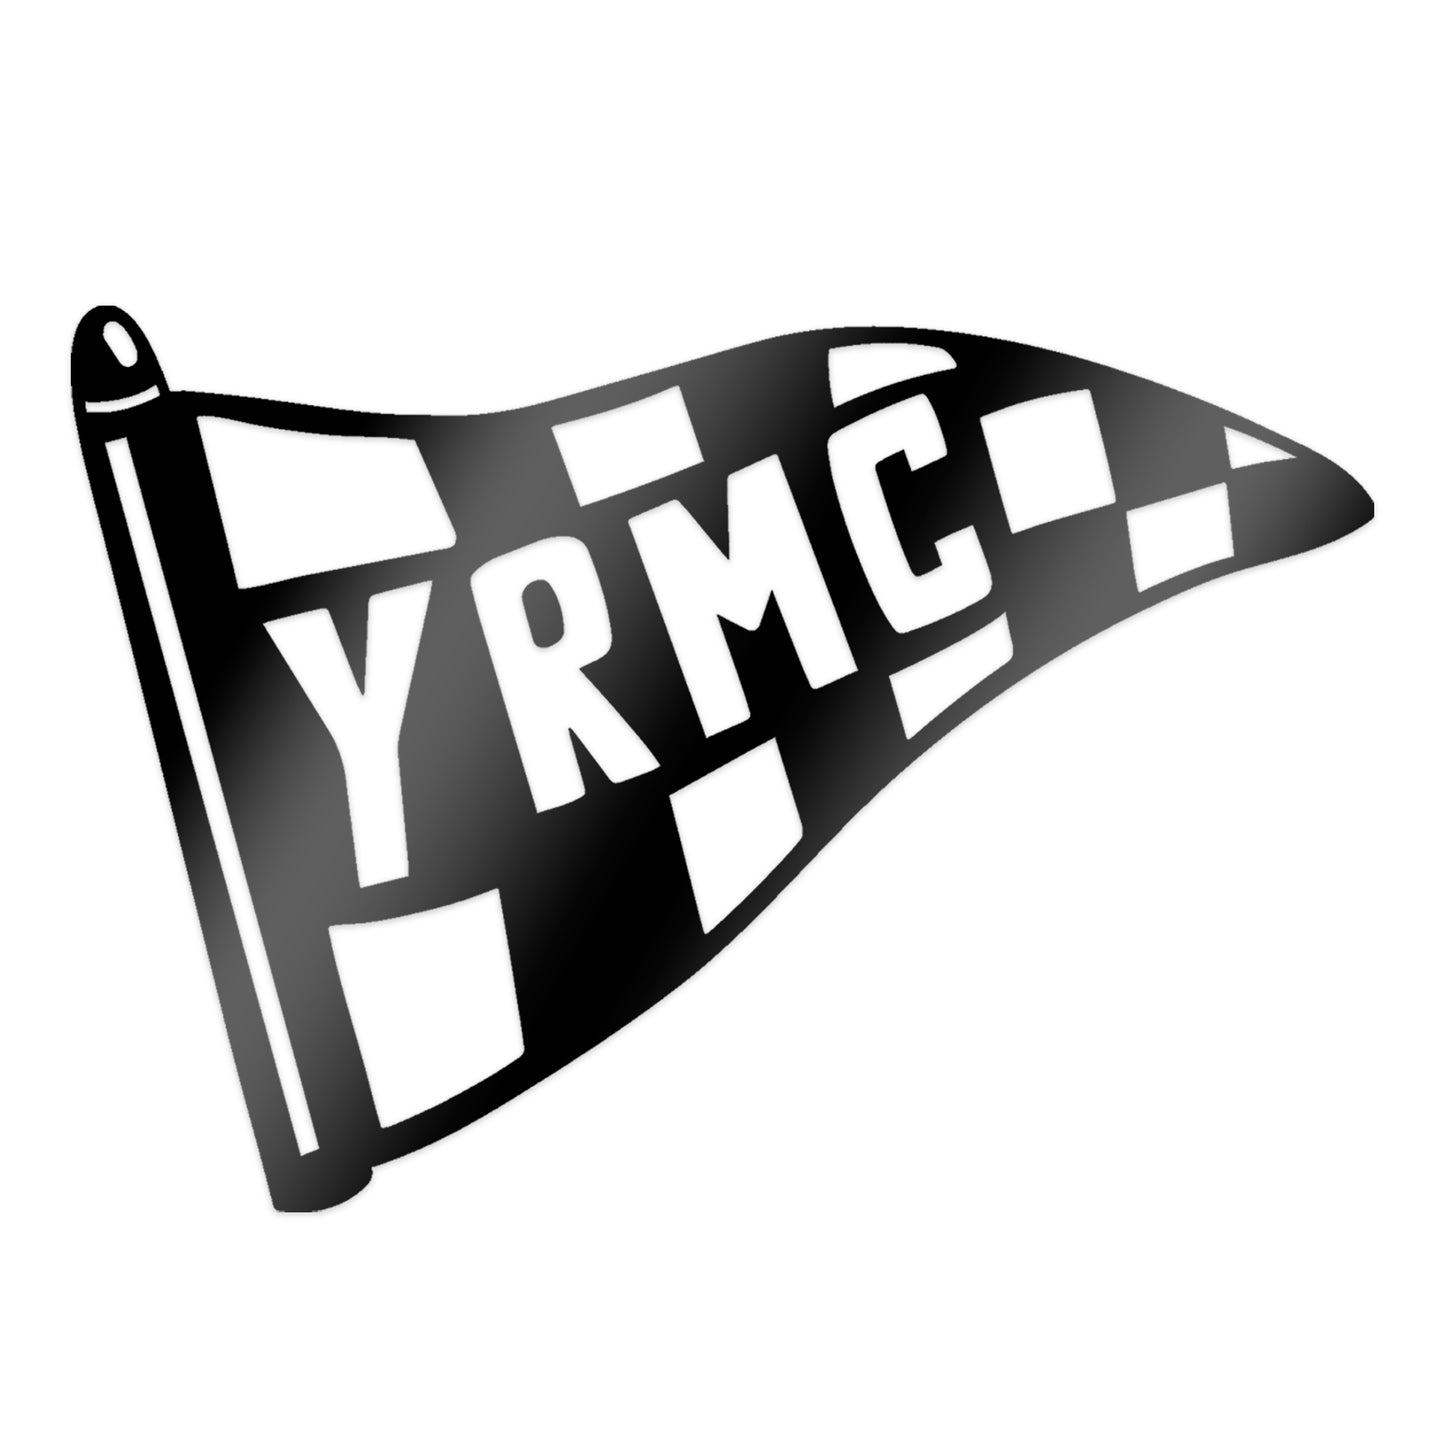 YRMC Motorport Sticker